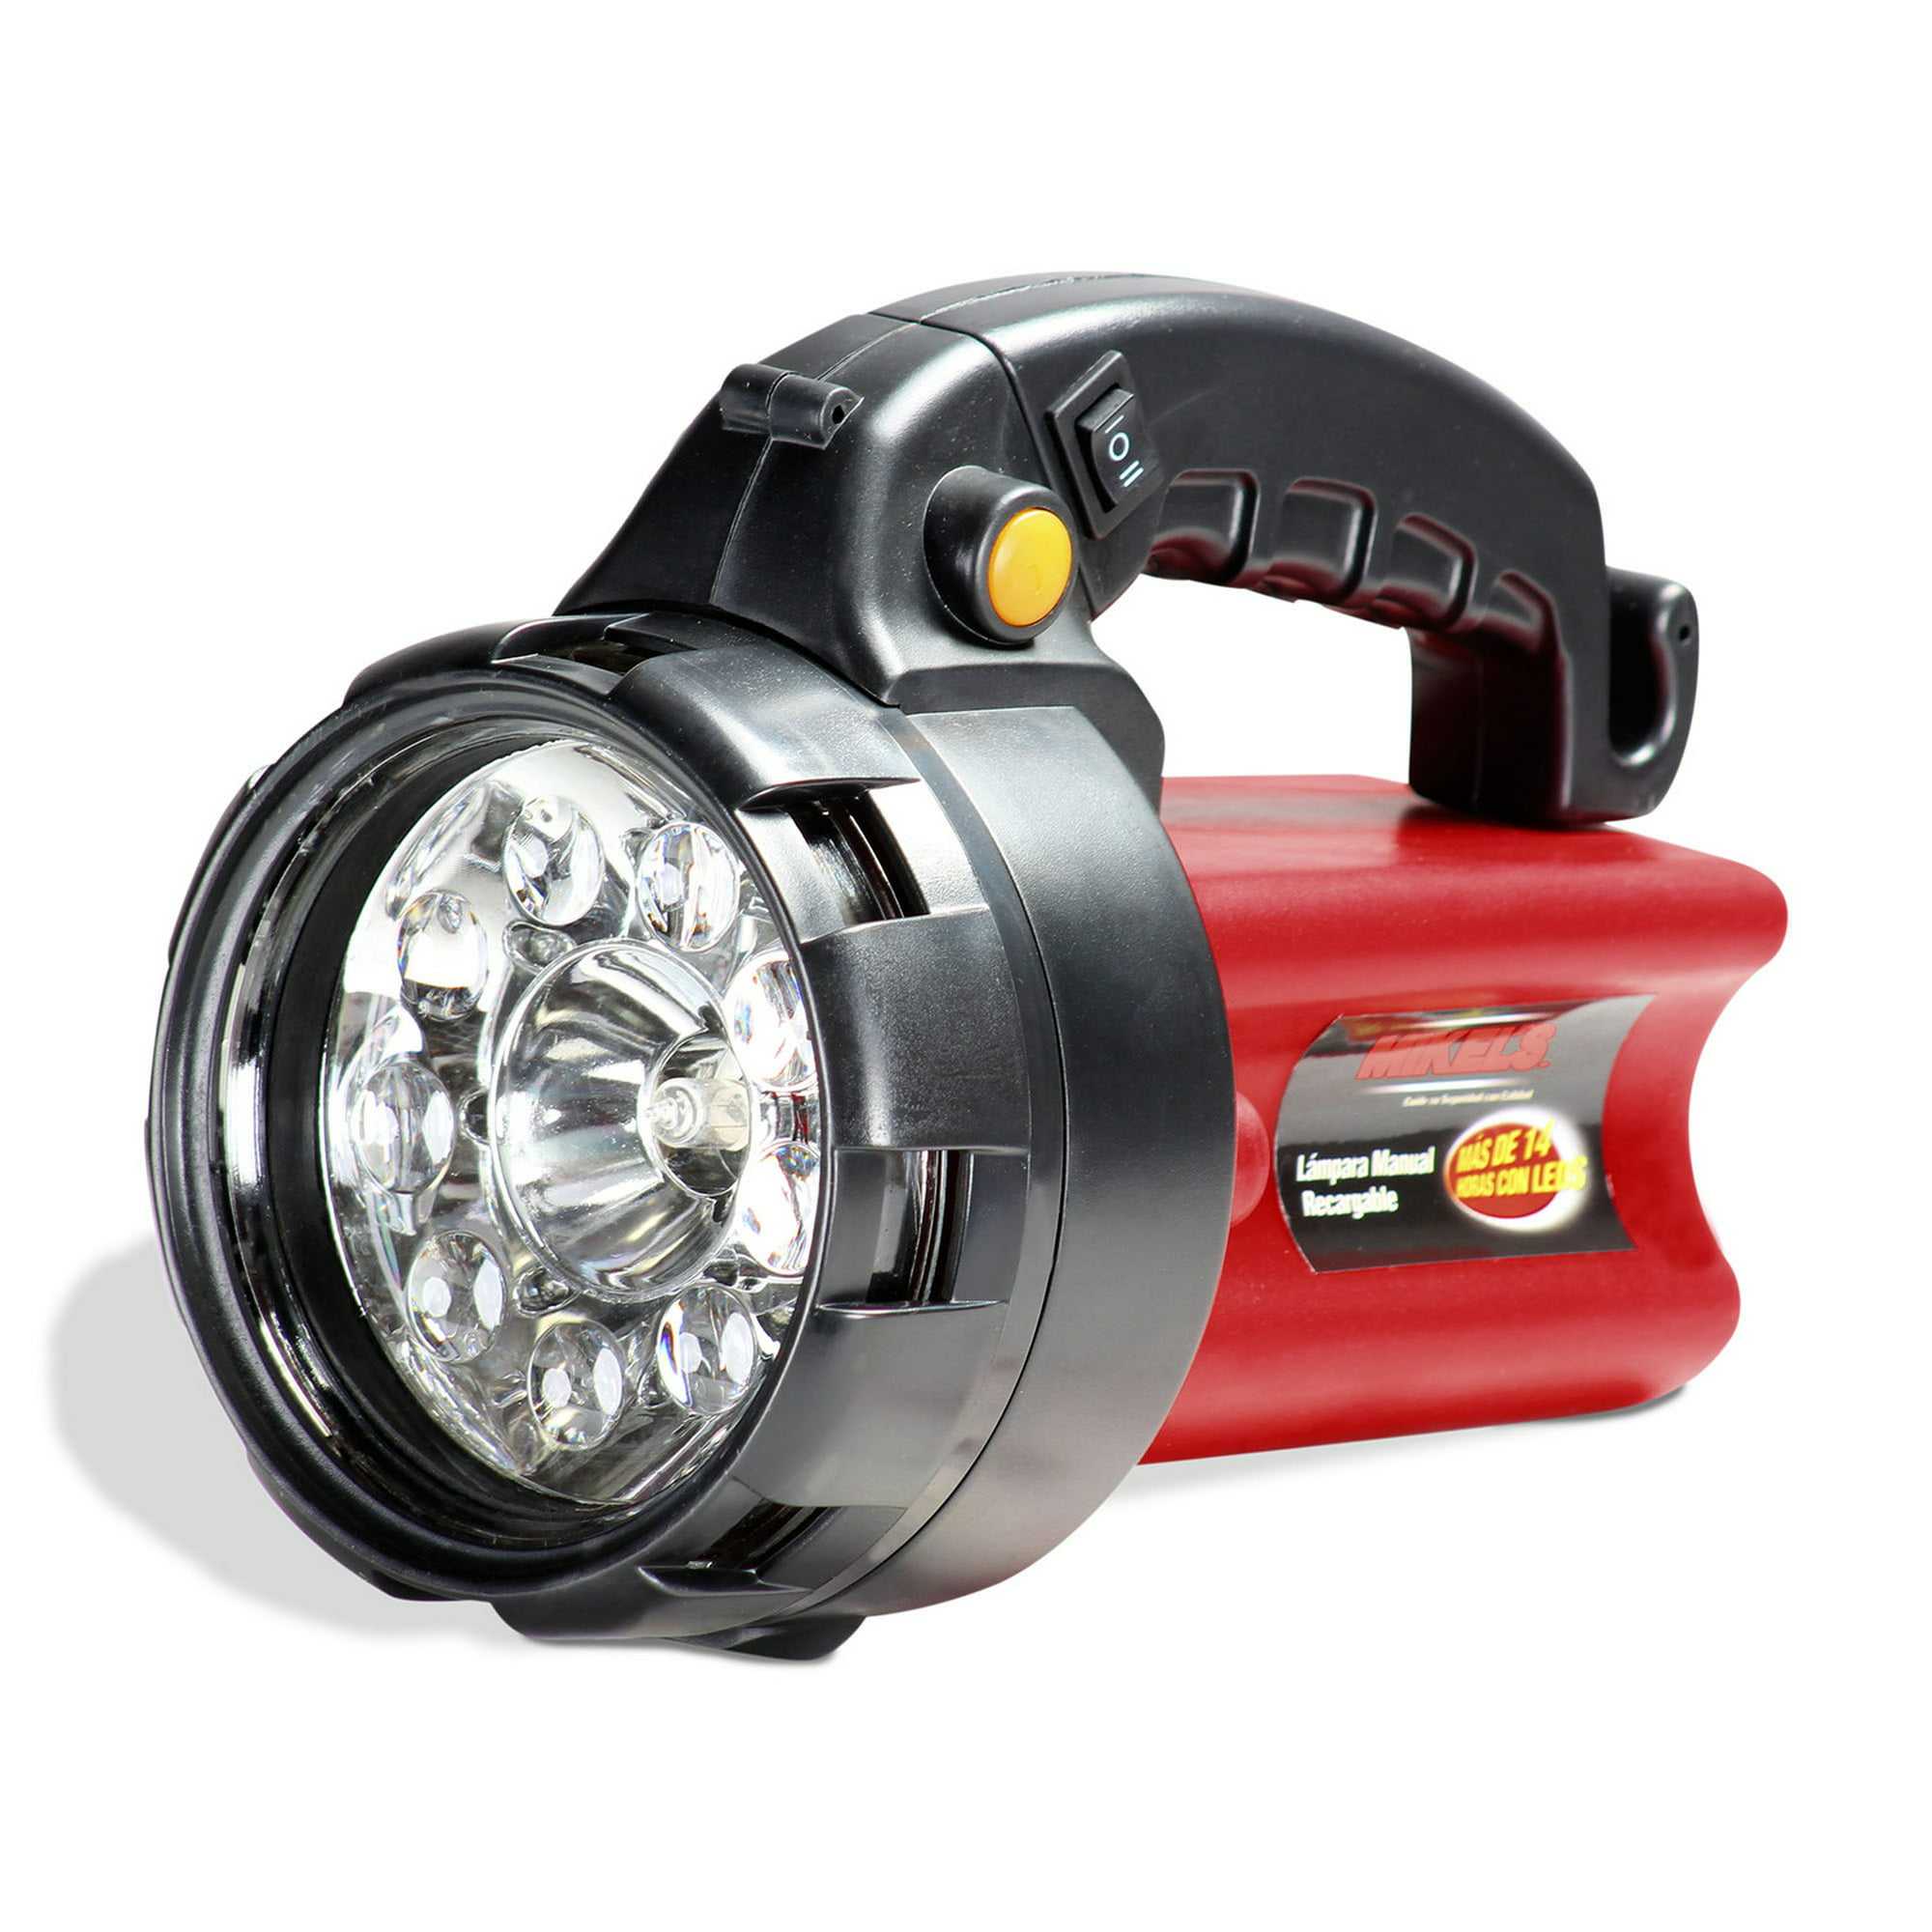 Lámpara LED a batería recargable 44 cm - DJMania